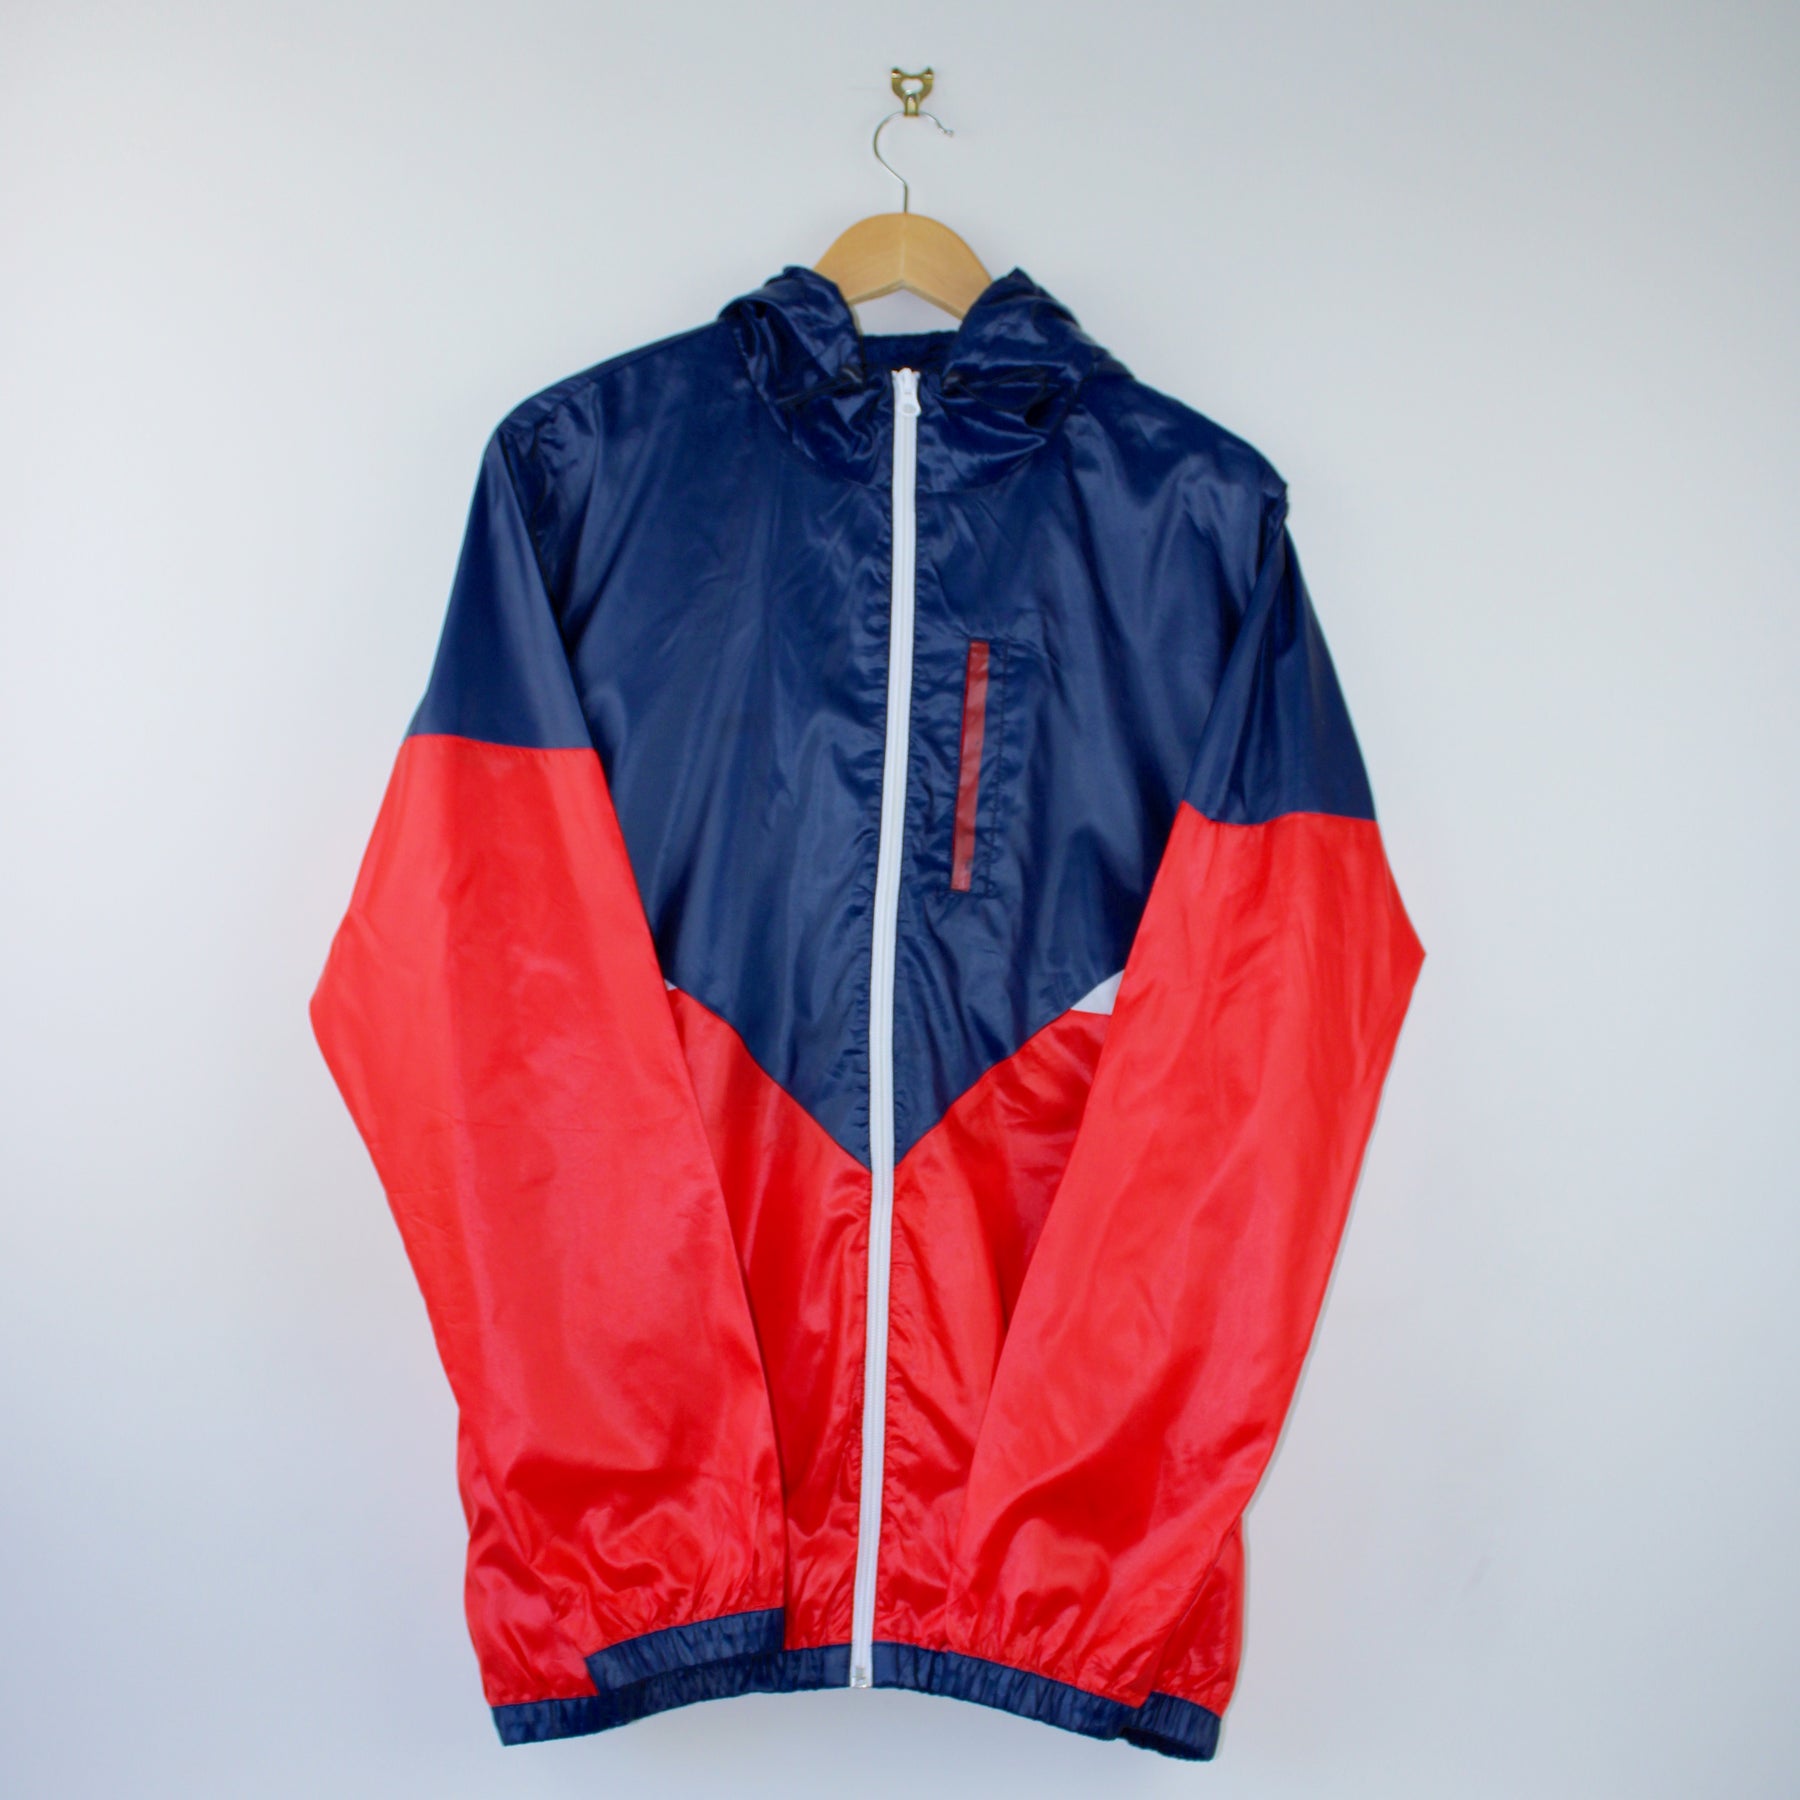 90's adidas windbreaker jacket